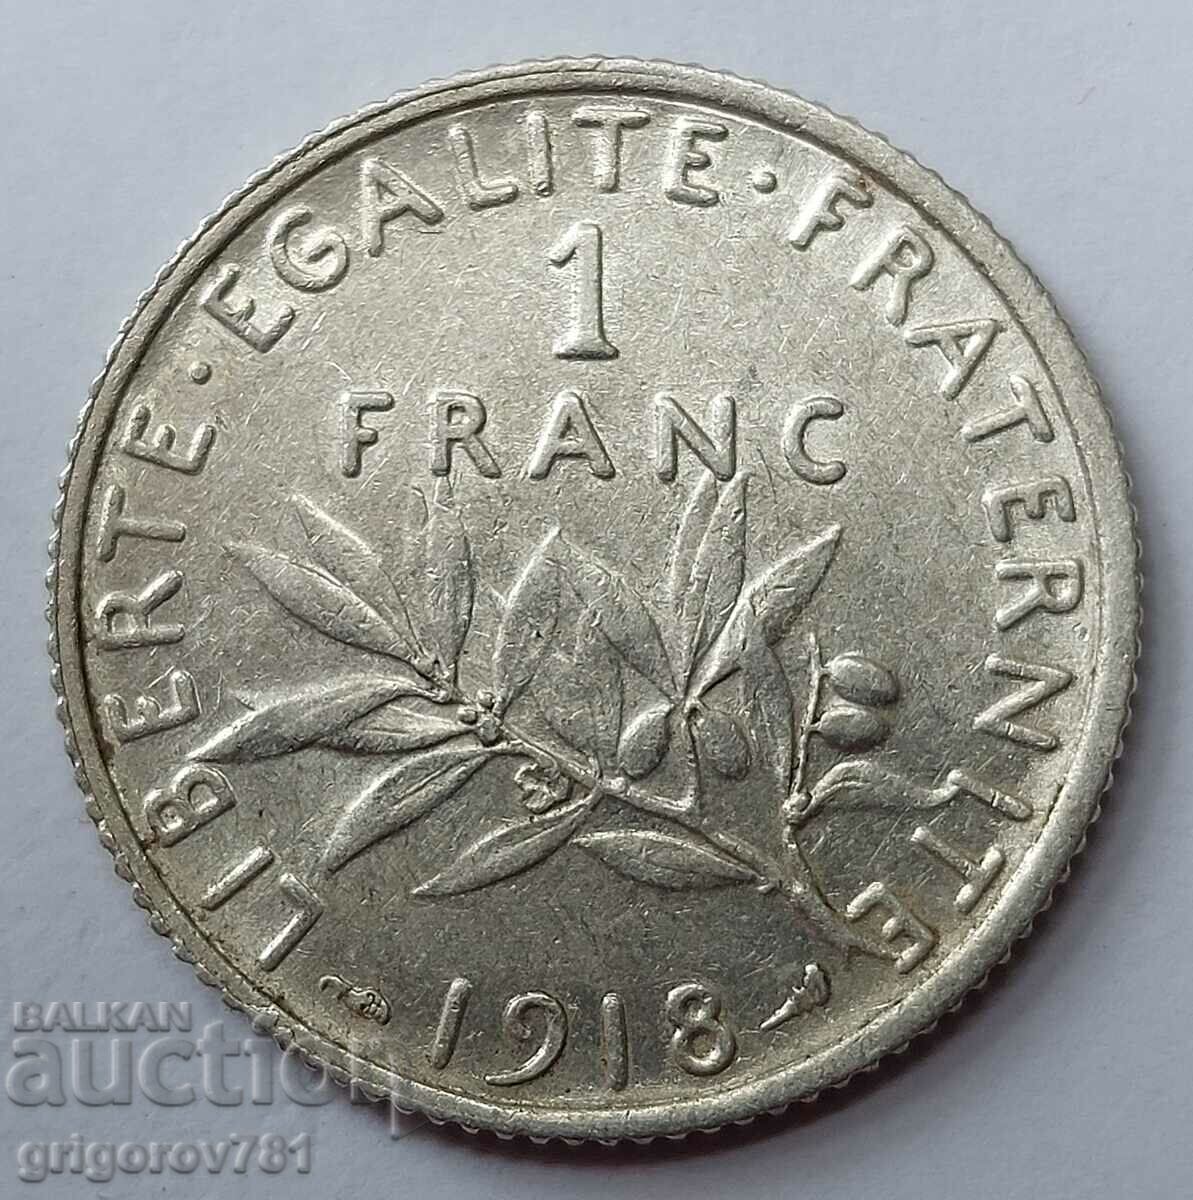 1 franc silver France 1918 - silver coin №21